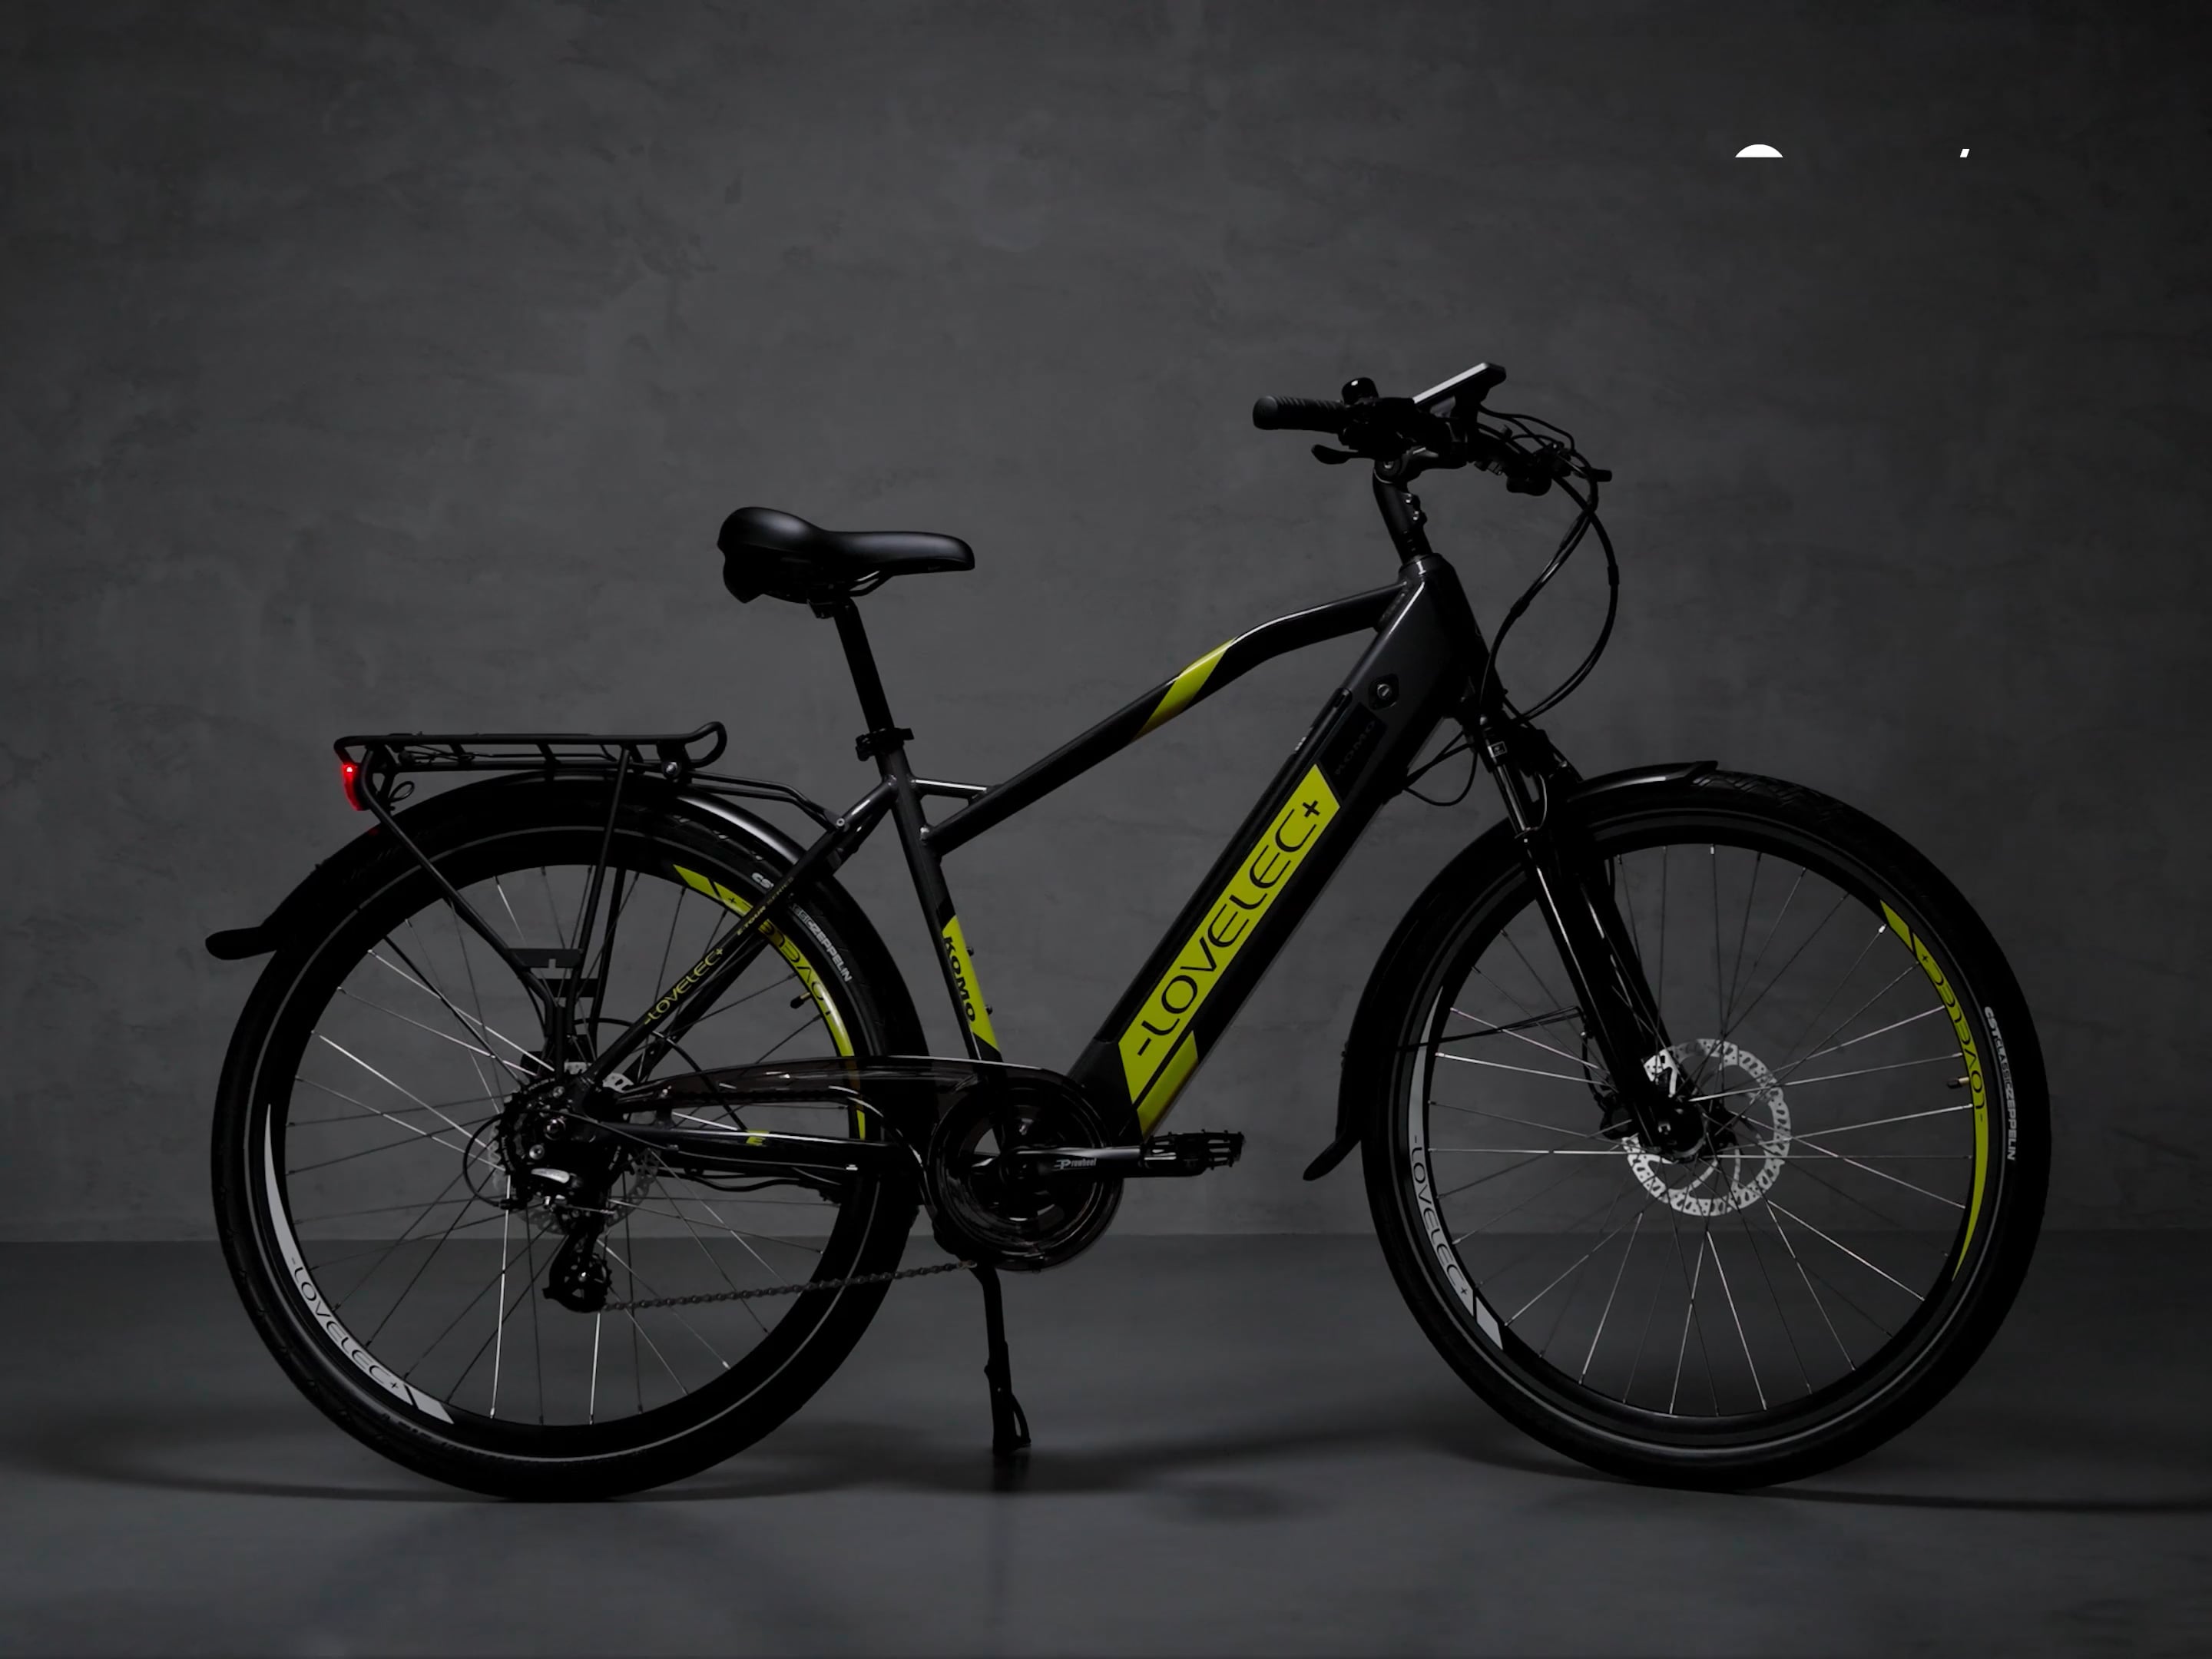 LOVELEC Komo Man 16Ah сиво-жълт електрически велосипед B400363